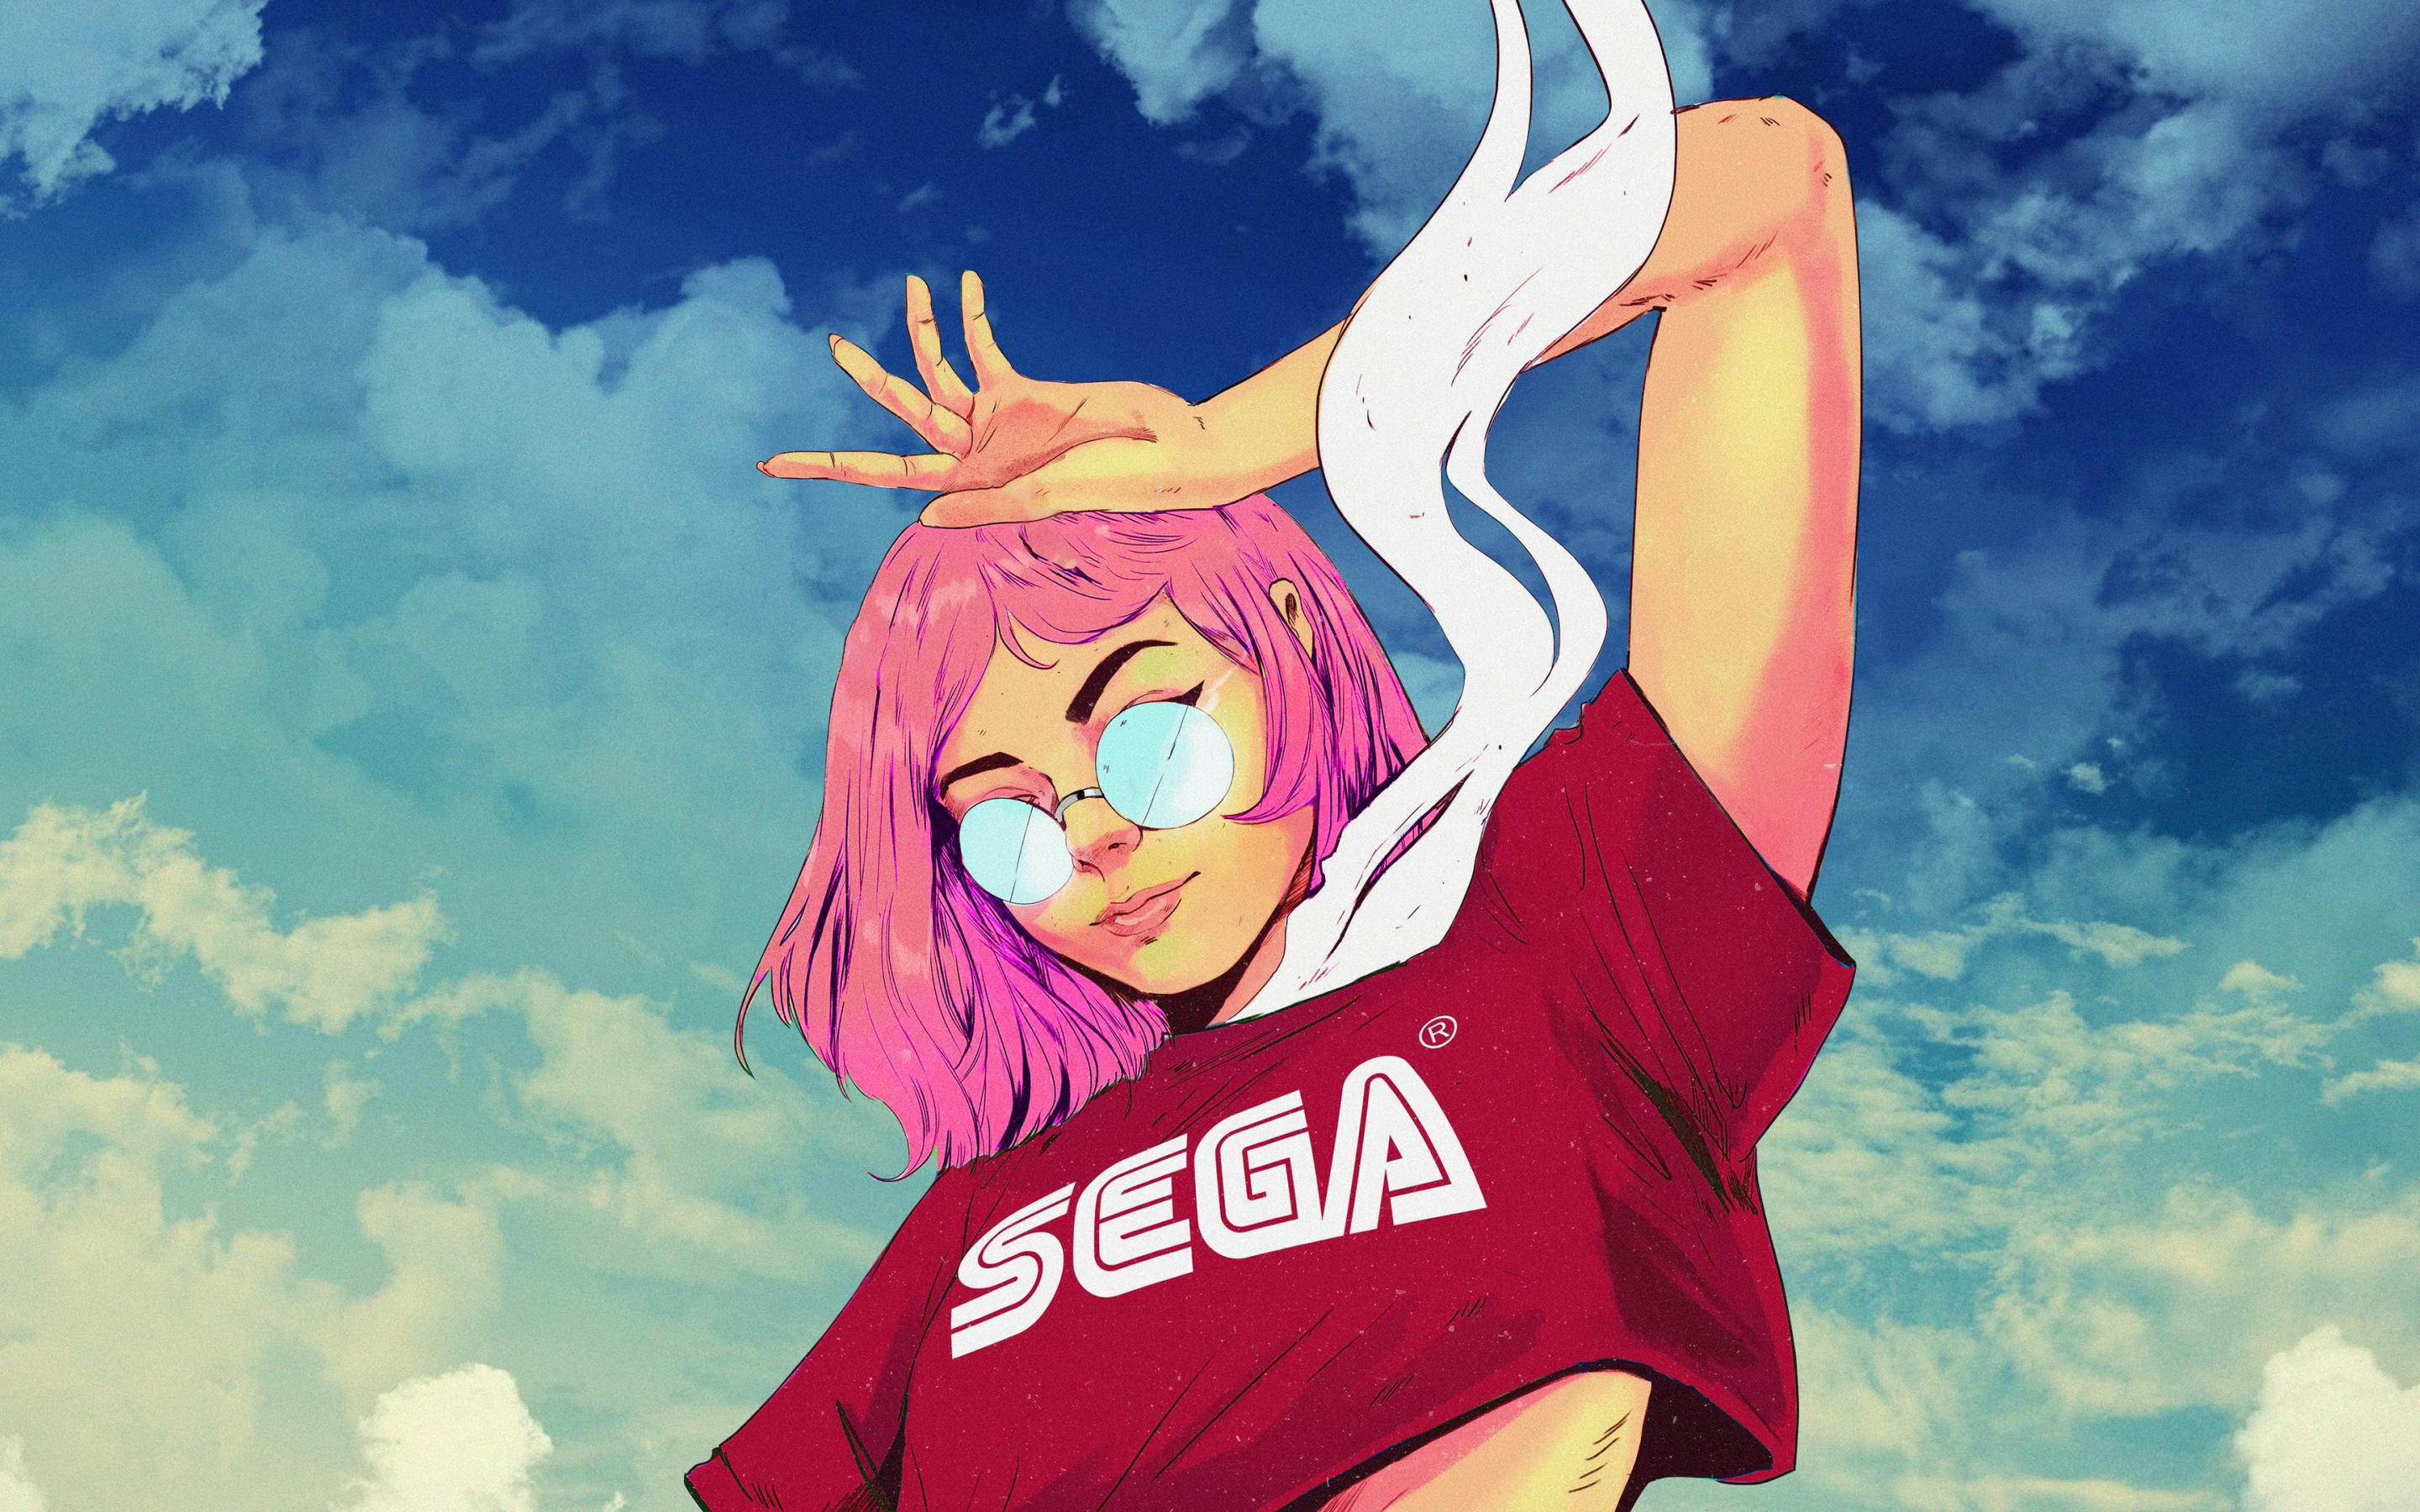 Sega's stylish girl, art, 2880x1800 wallpaper